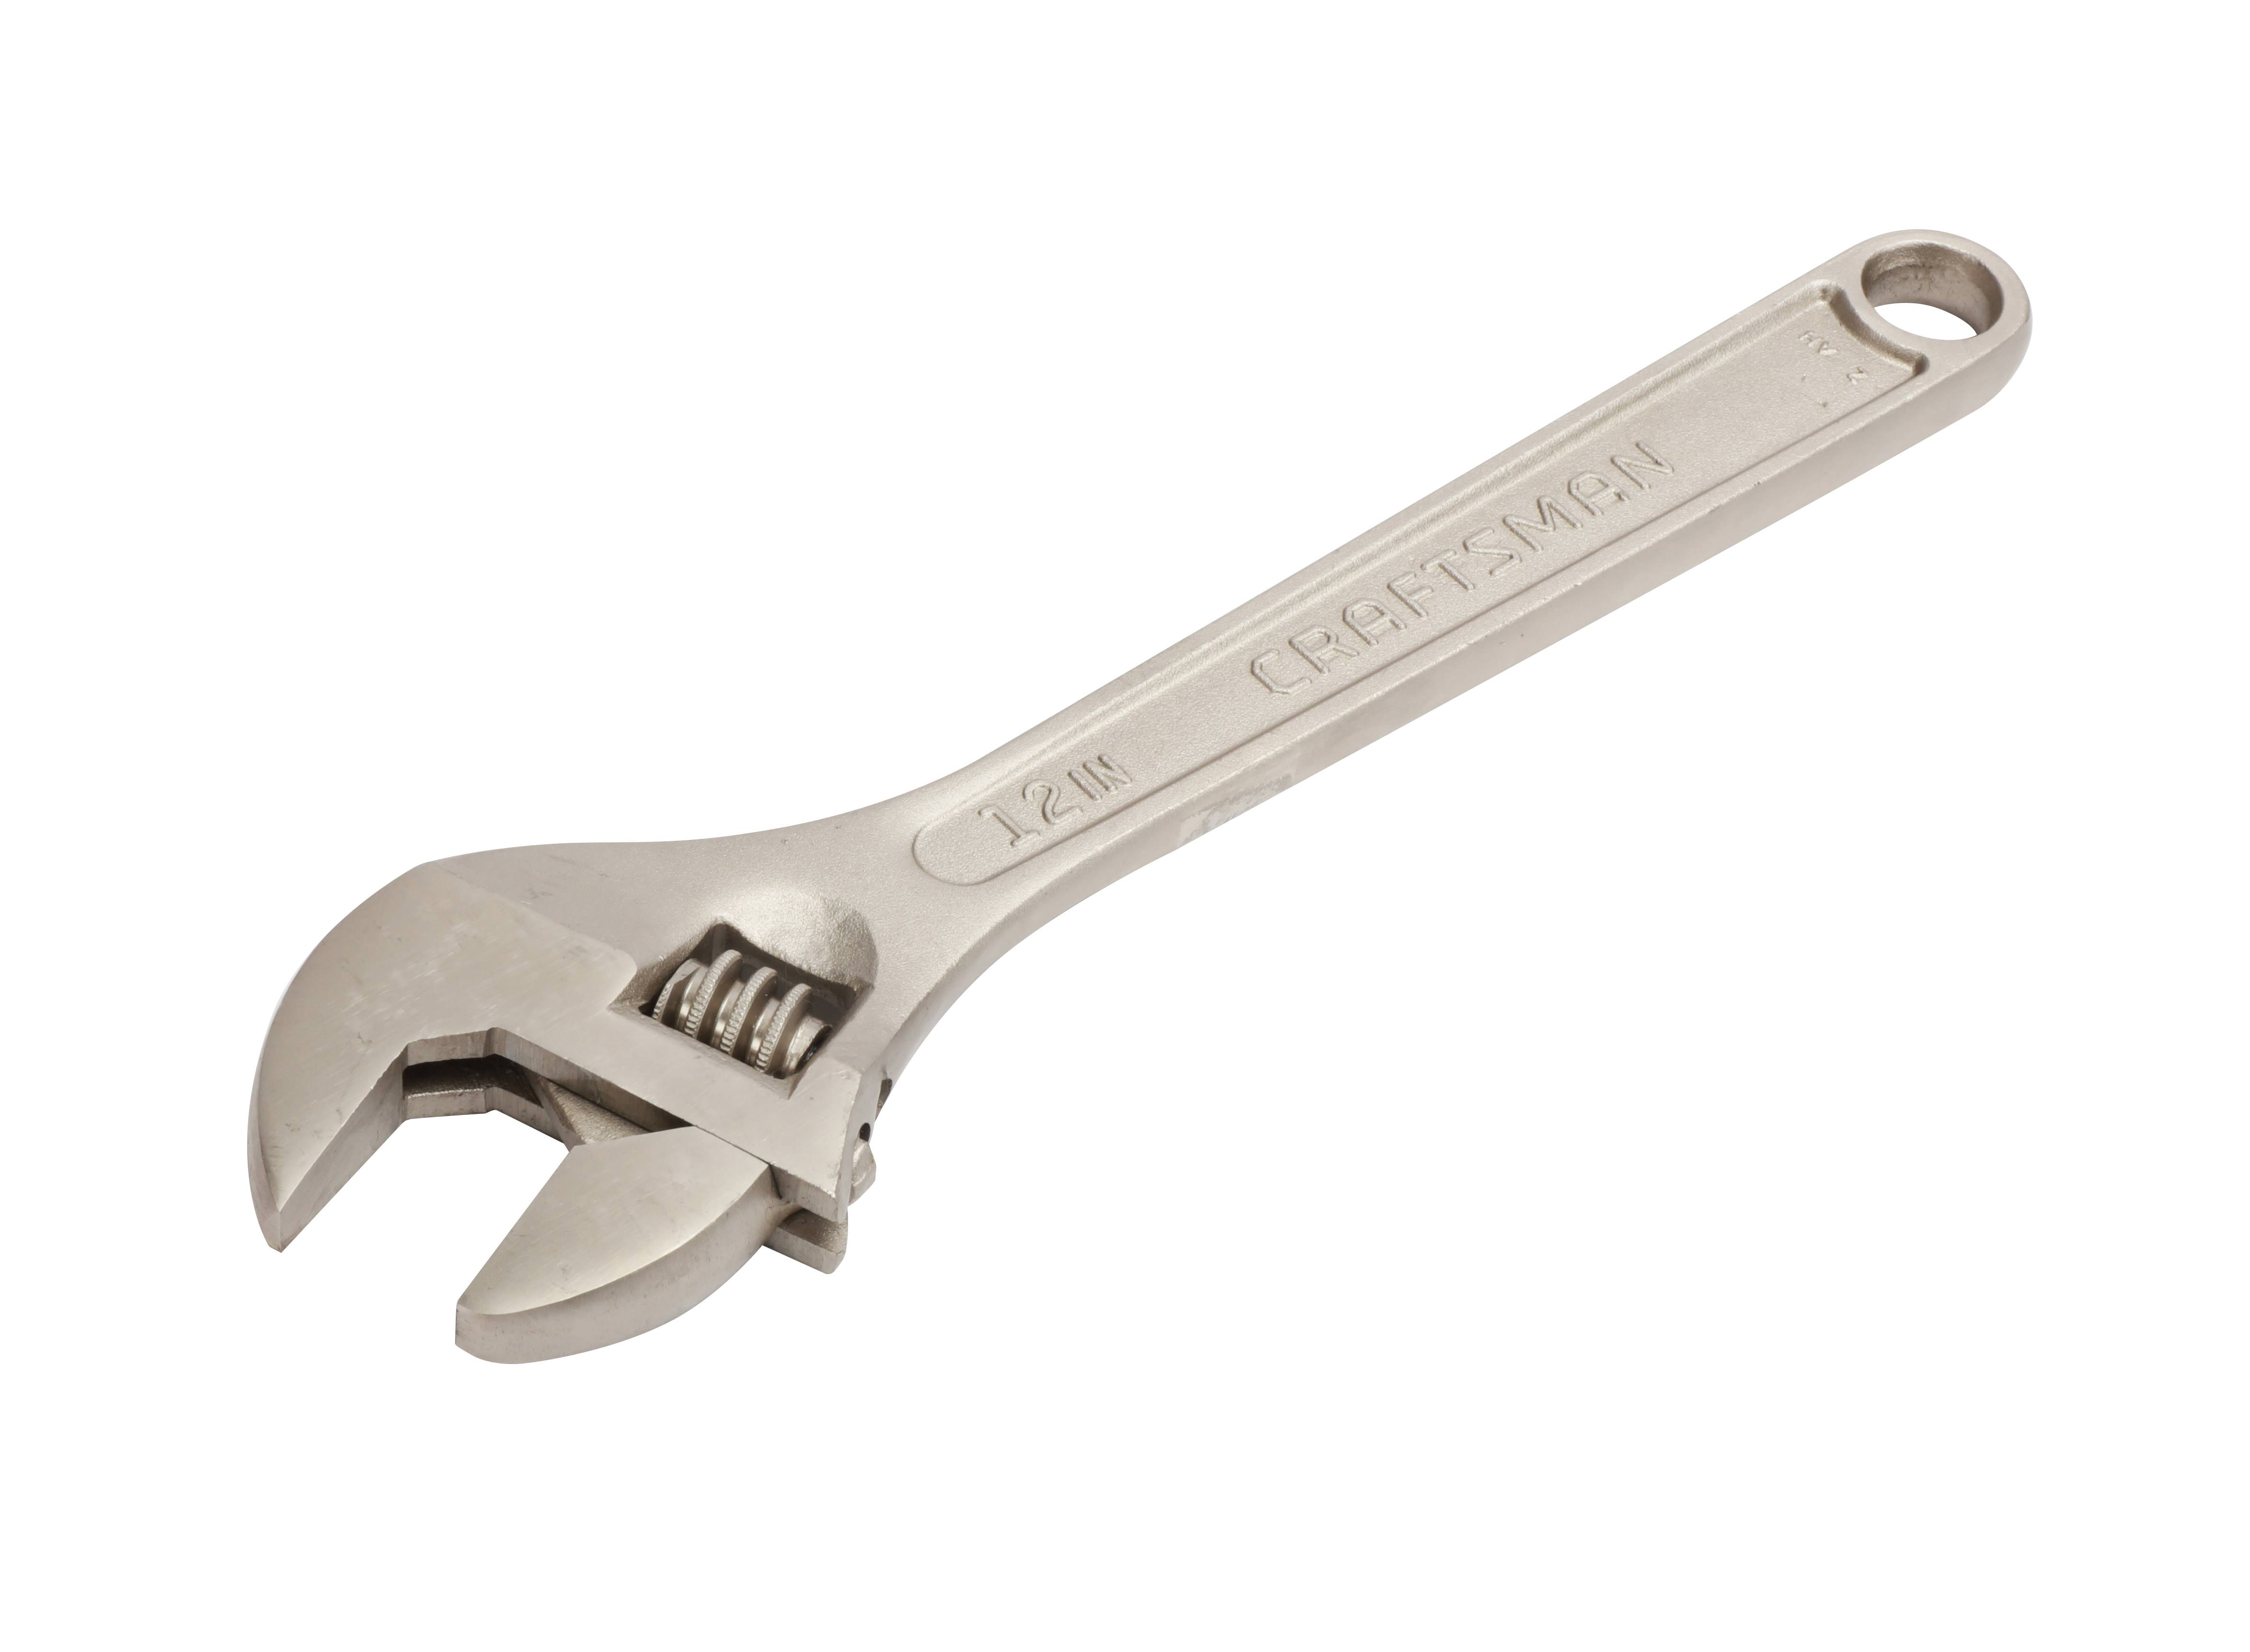 Craftsman 12" Adjustable Wrench